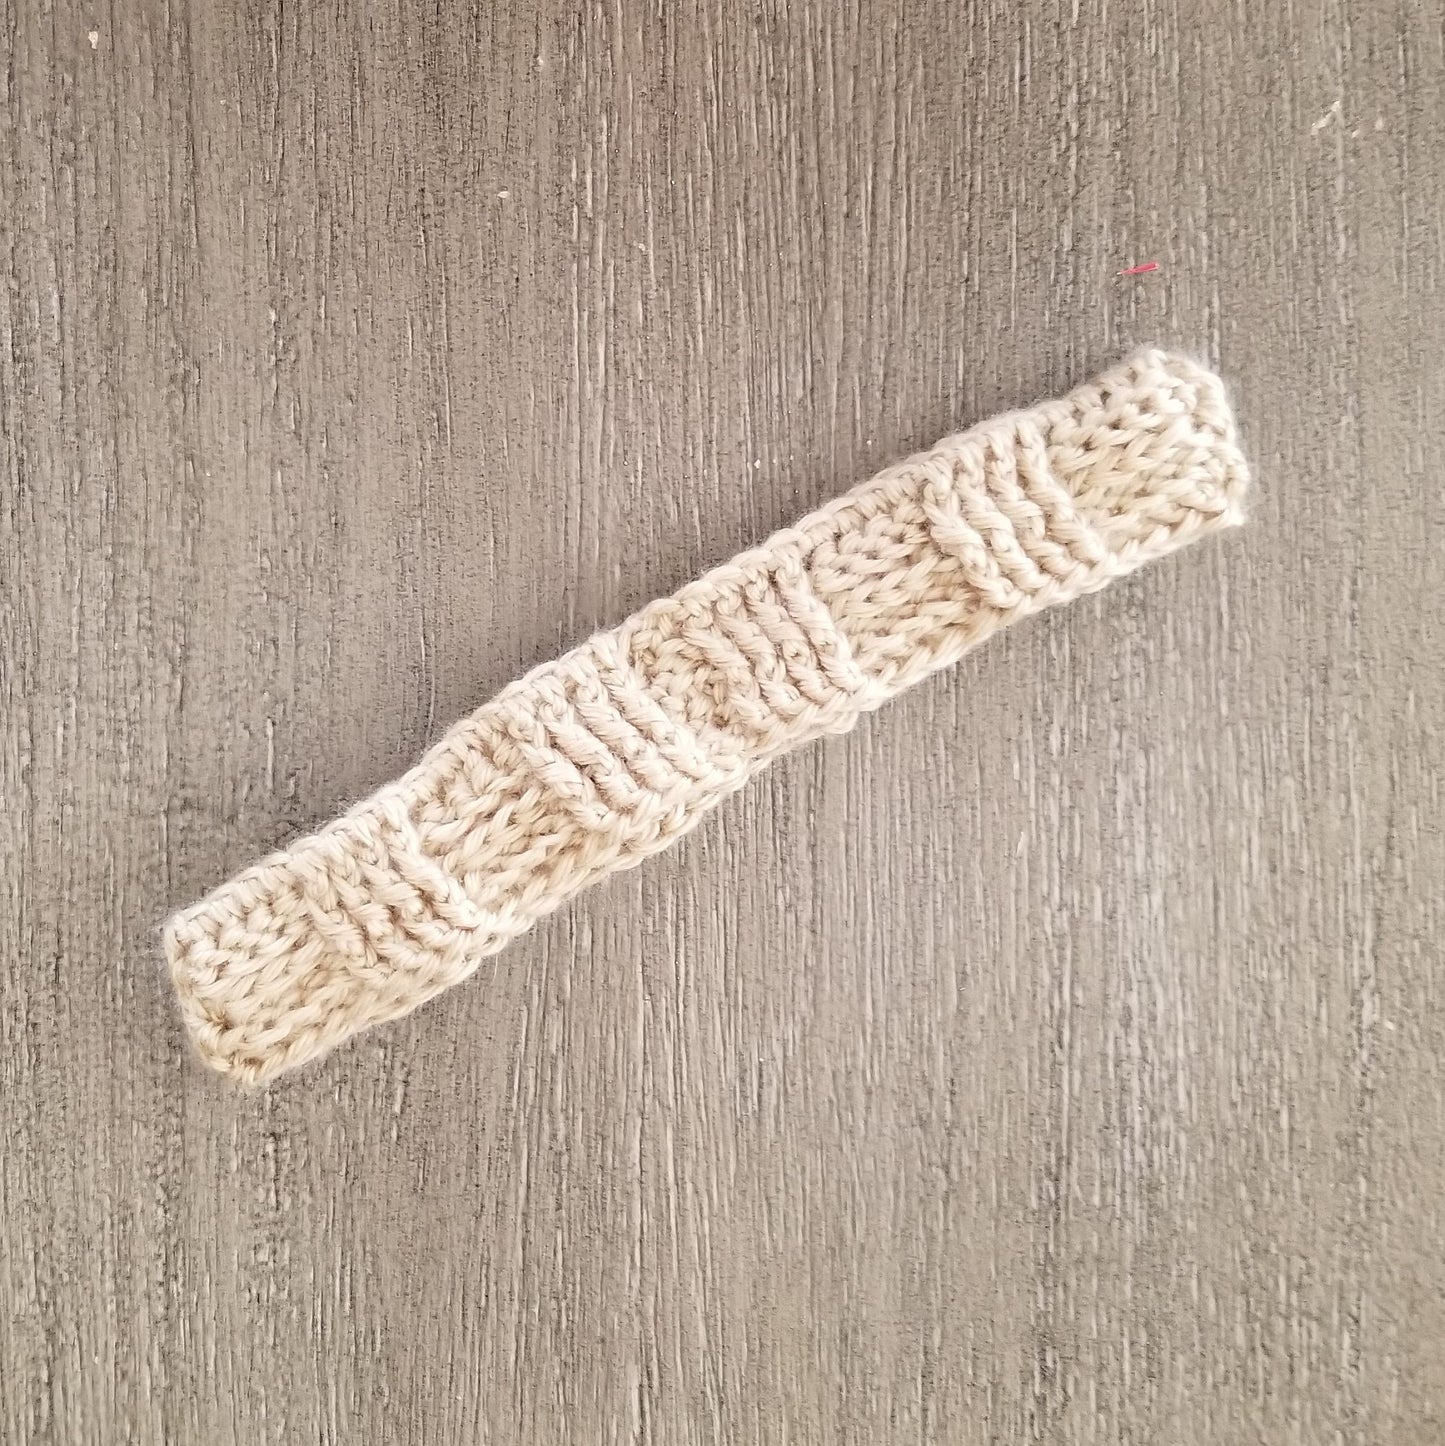 Ribbed Headband Crochet Pattern, PDF Digital Download